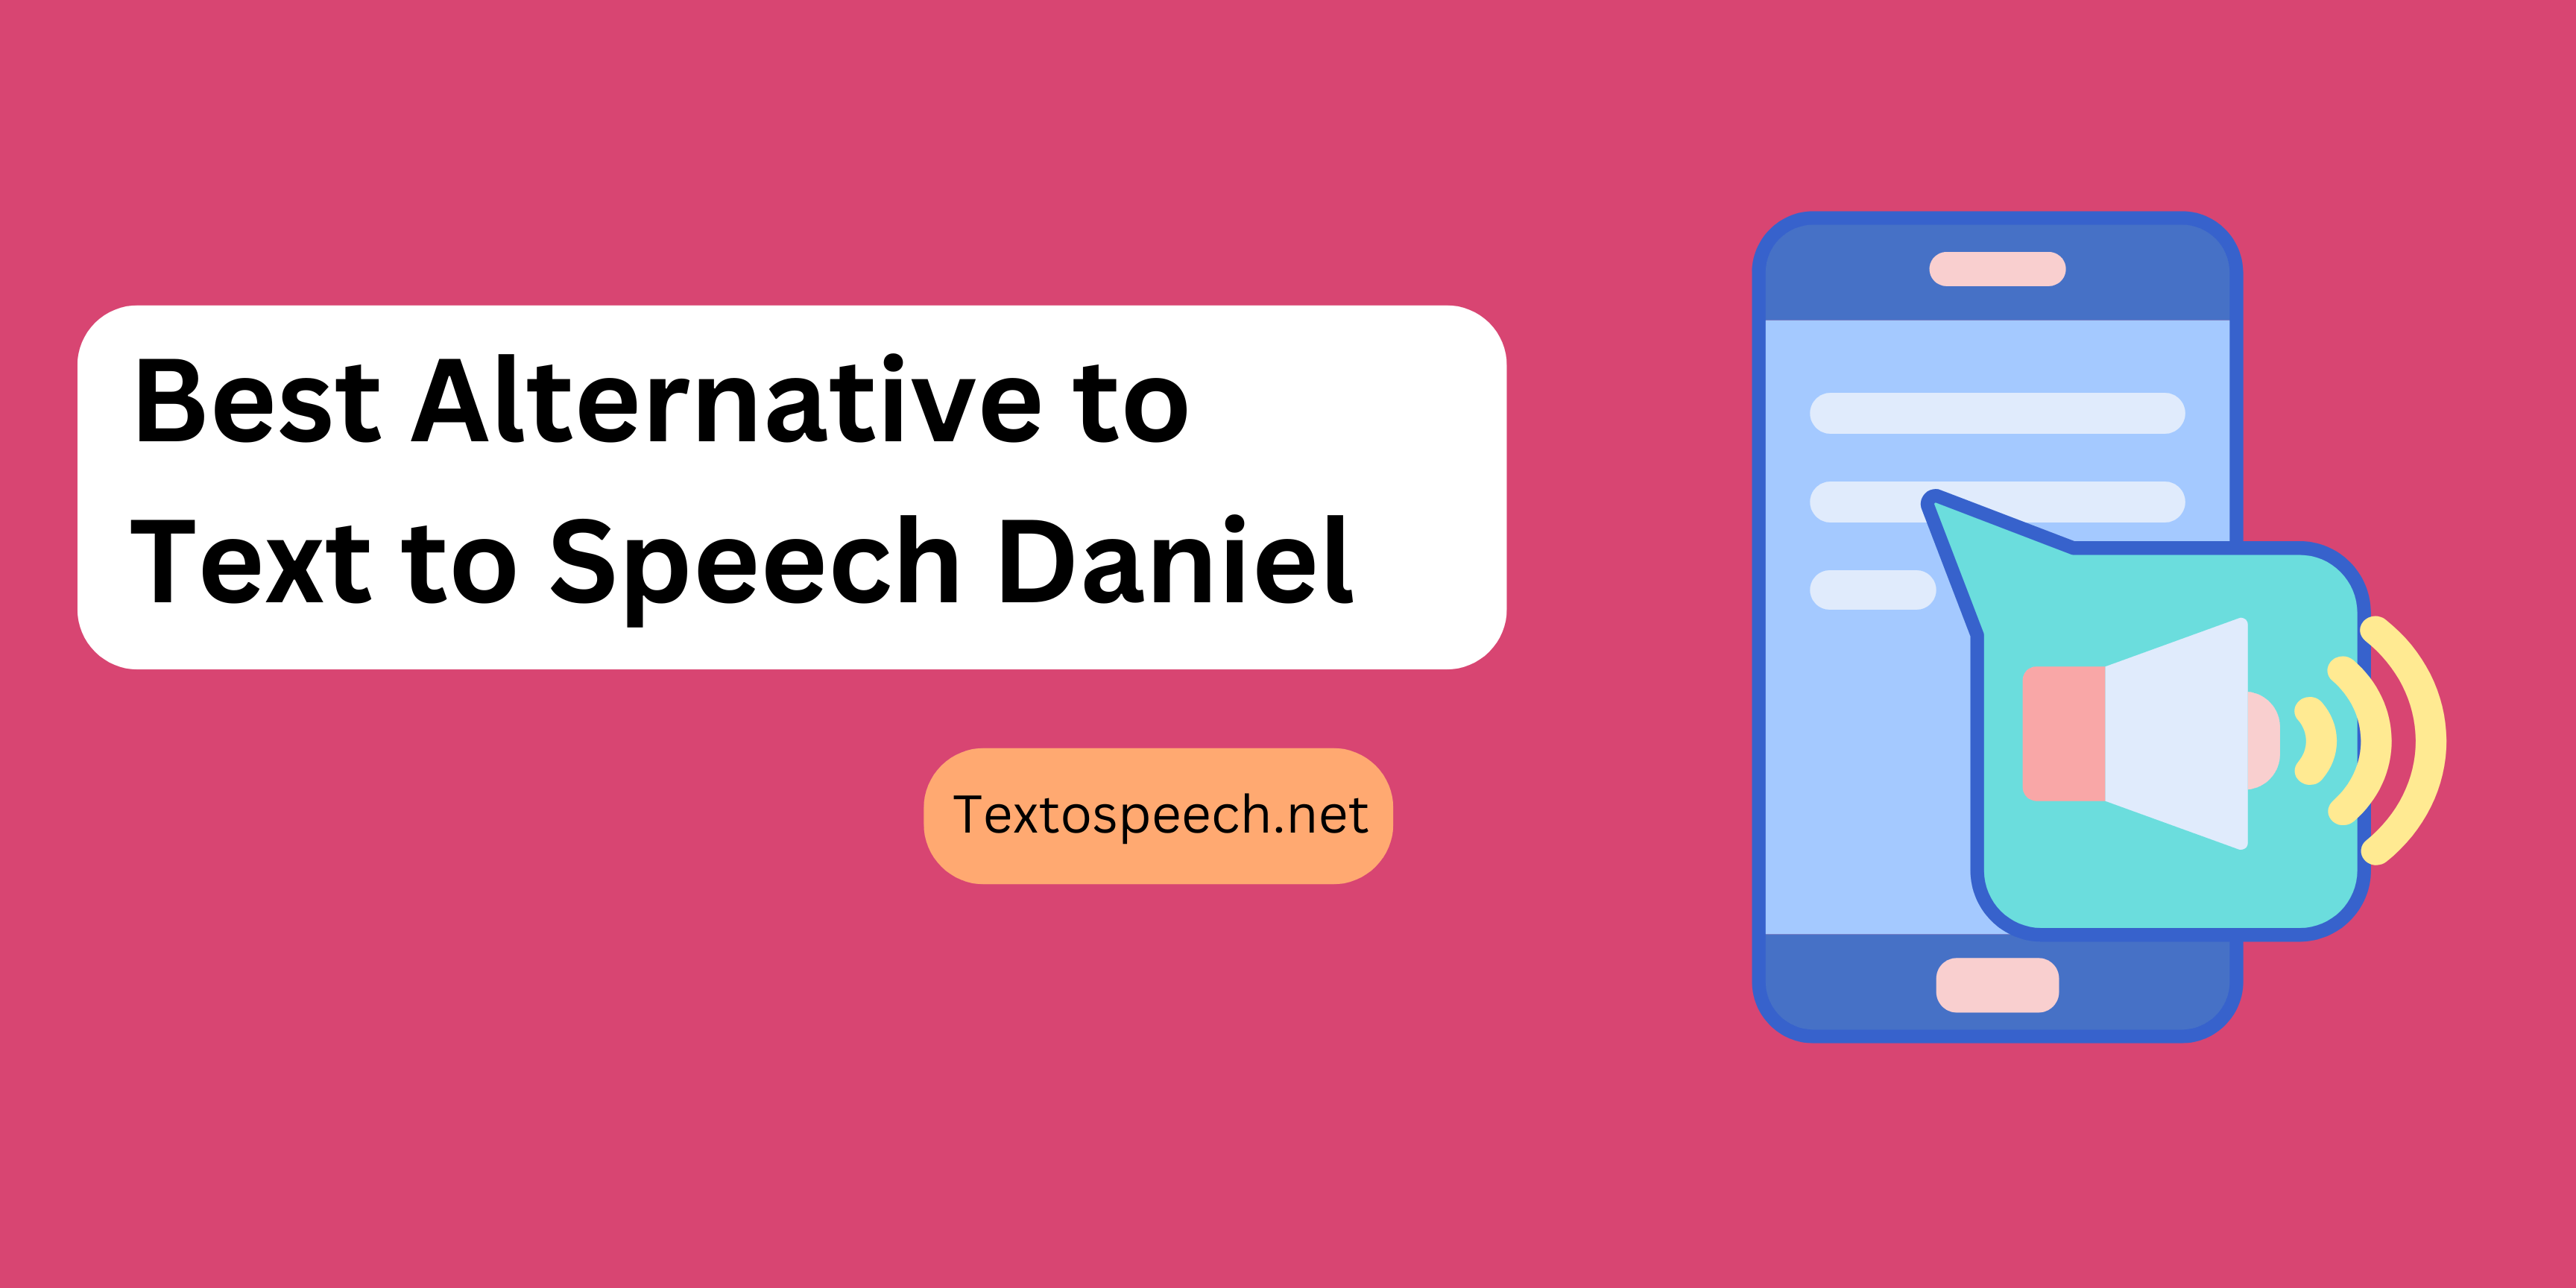 Best Alternative to Text to Speech Daniel